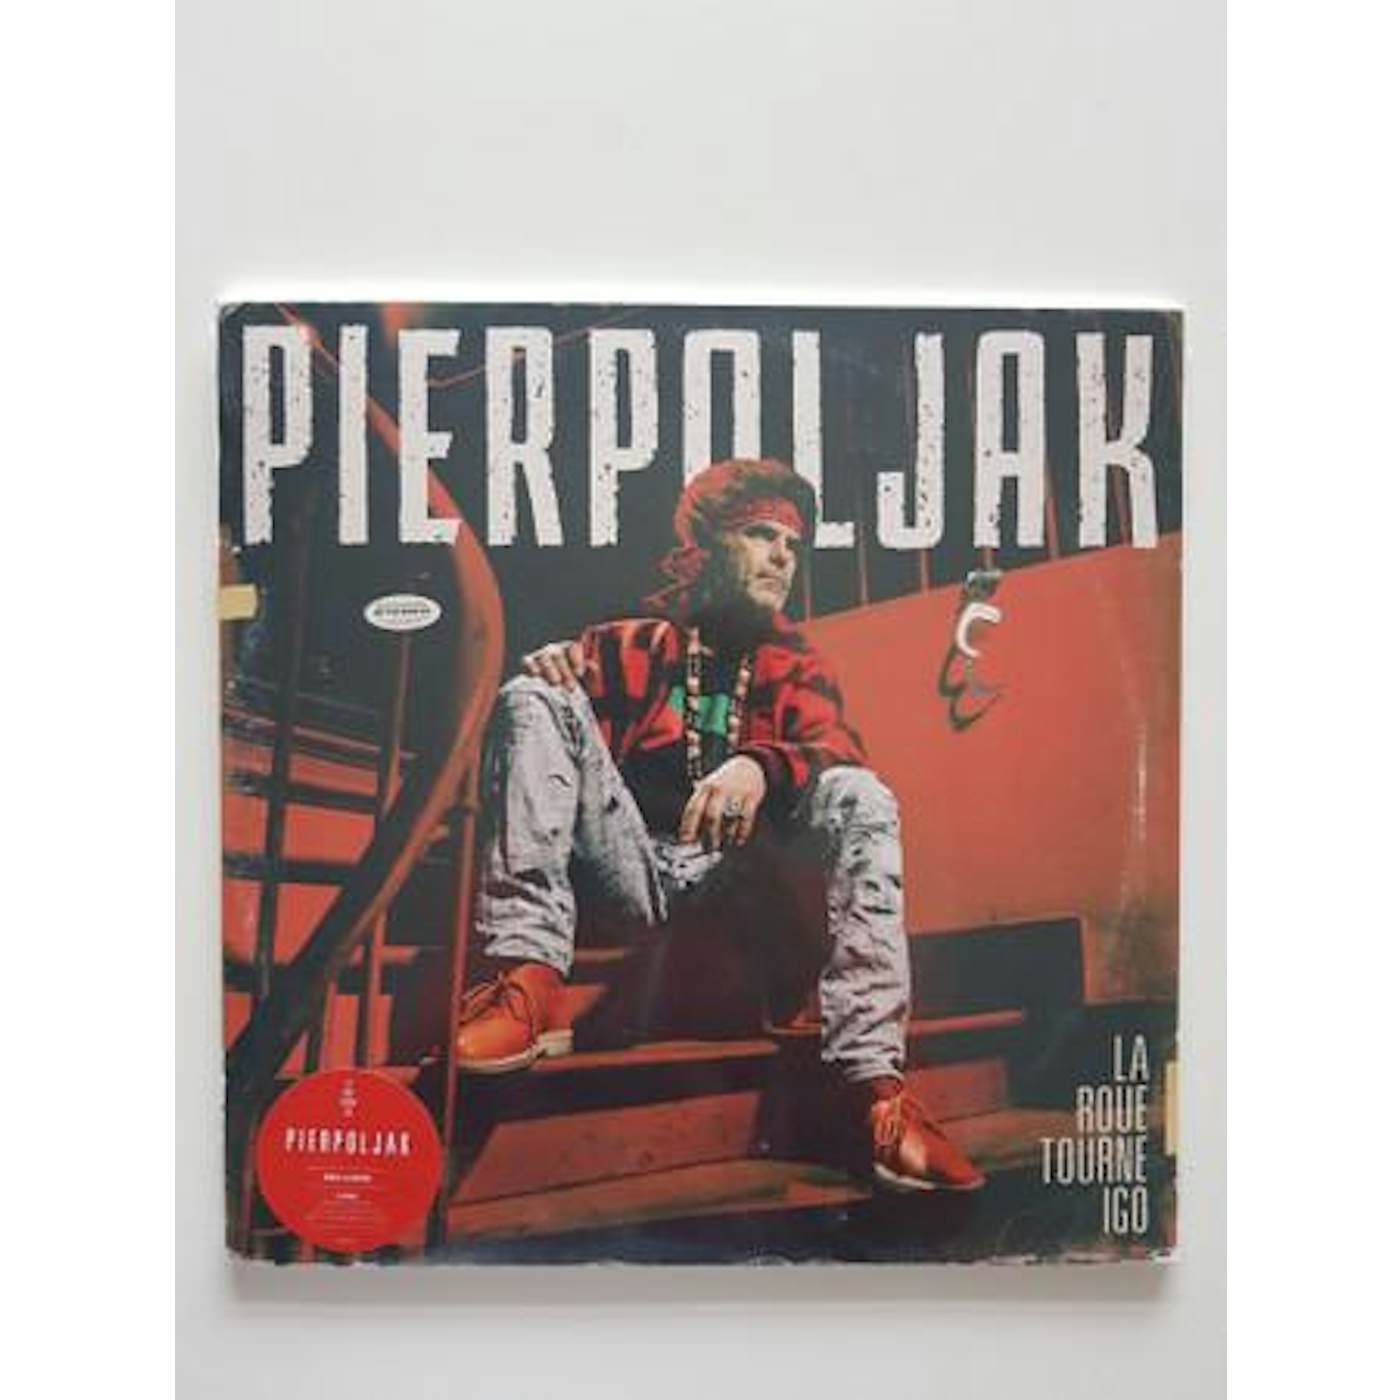 Pierpoljak La roue tourne Igo Vinyl Record